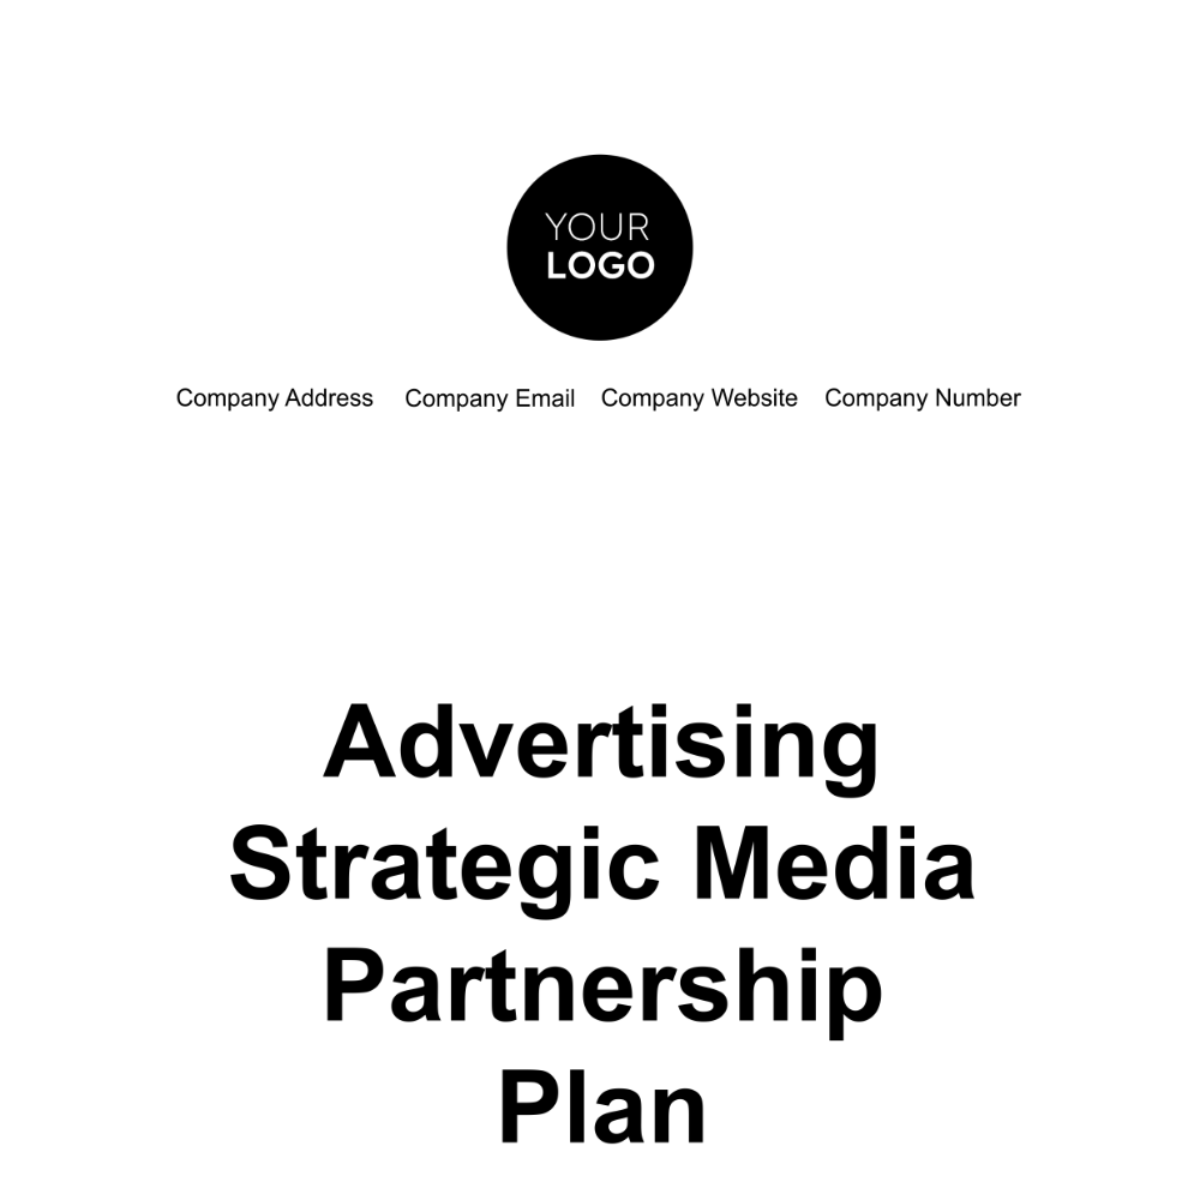 Advertising Strategic Media Partnership Plan Template